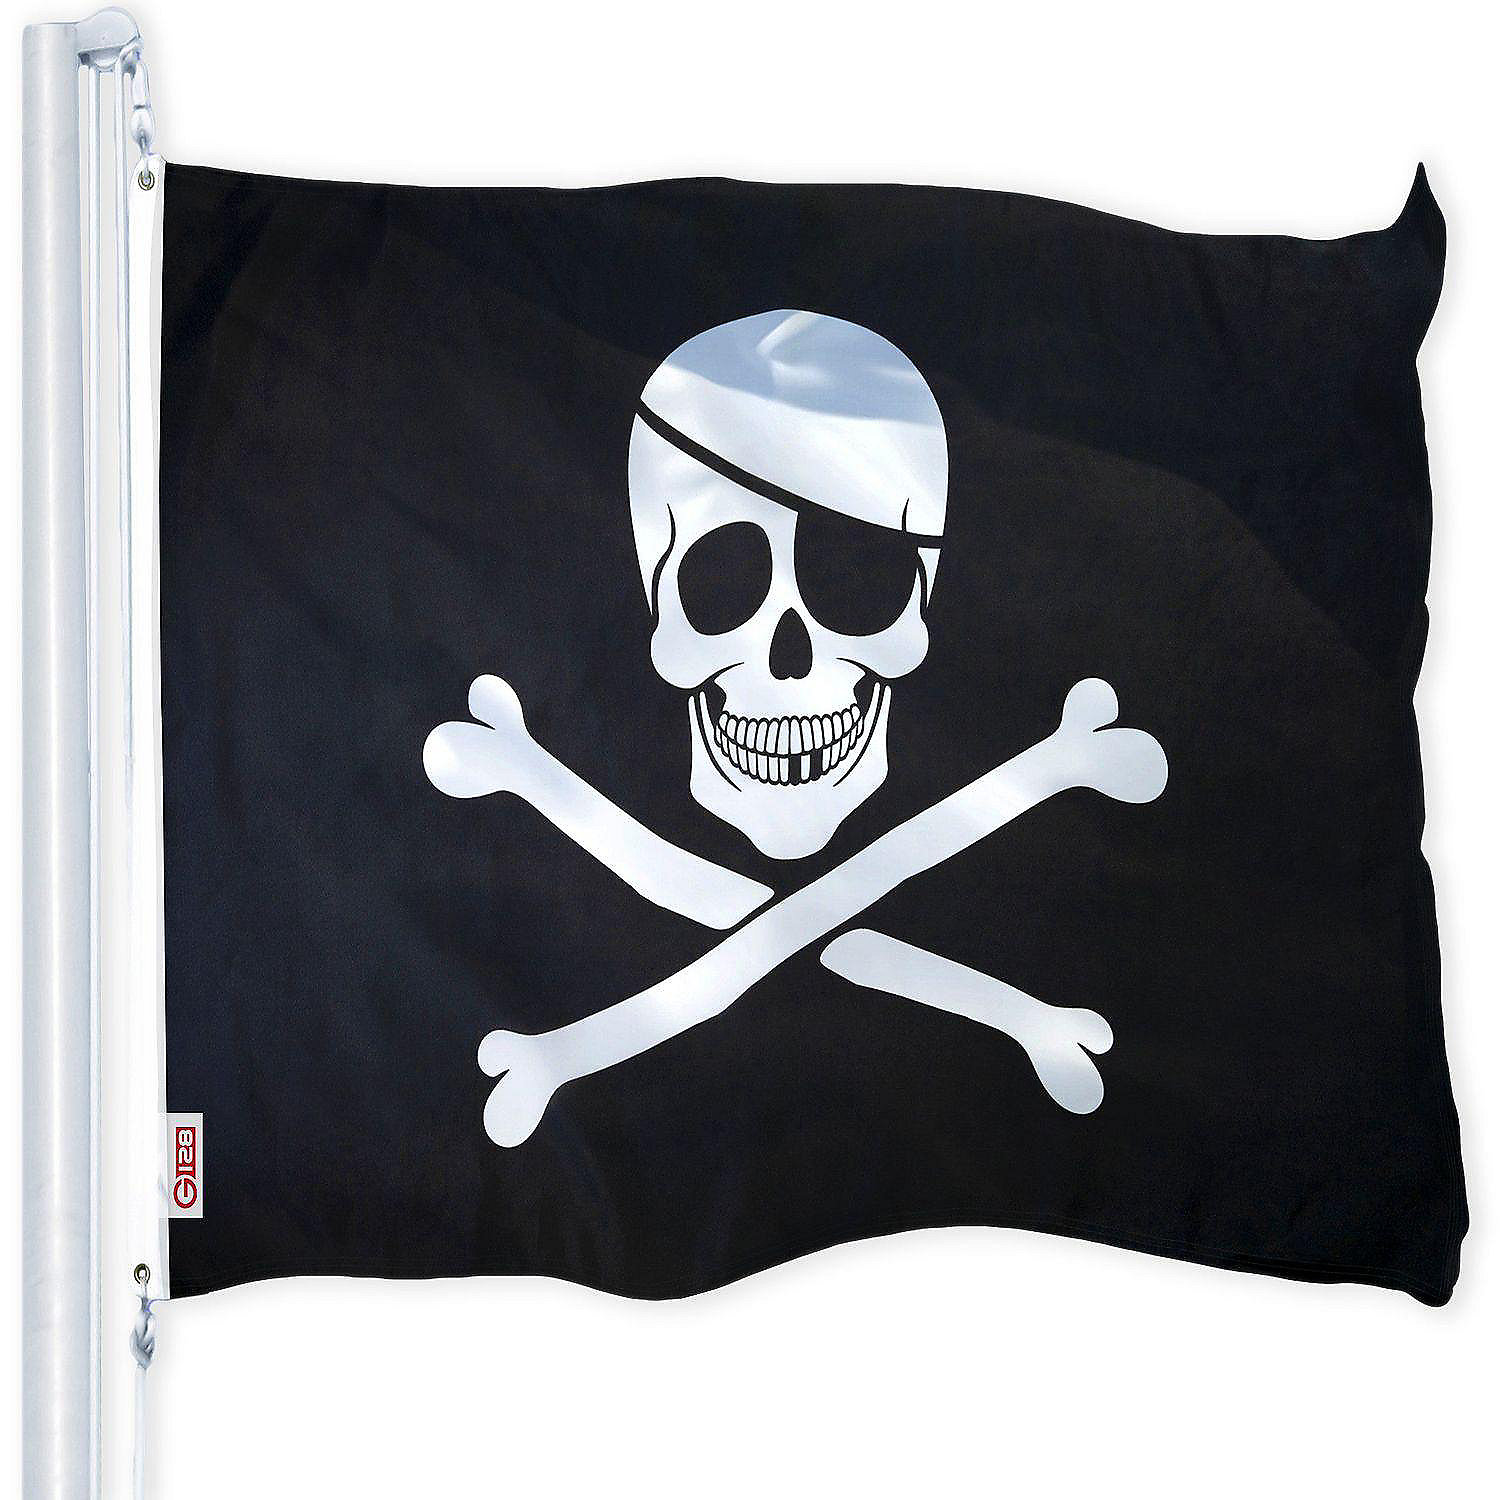 100% Polyester With Eyelets Pirate Skull Bones One Eyed Jack Flag 5 x 3 FT 